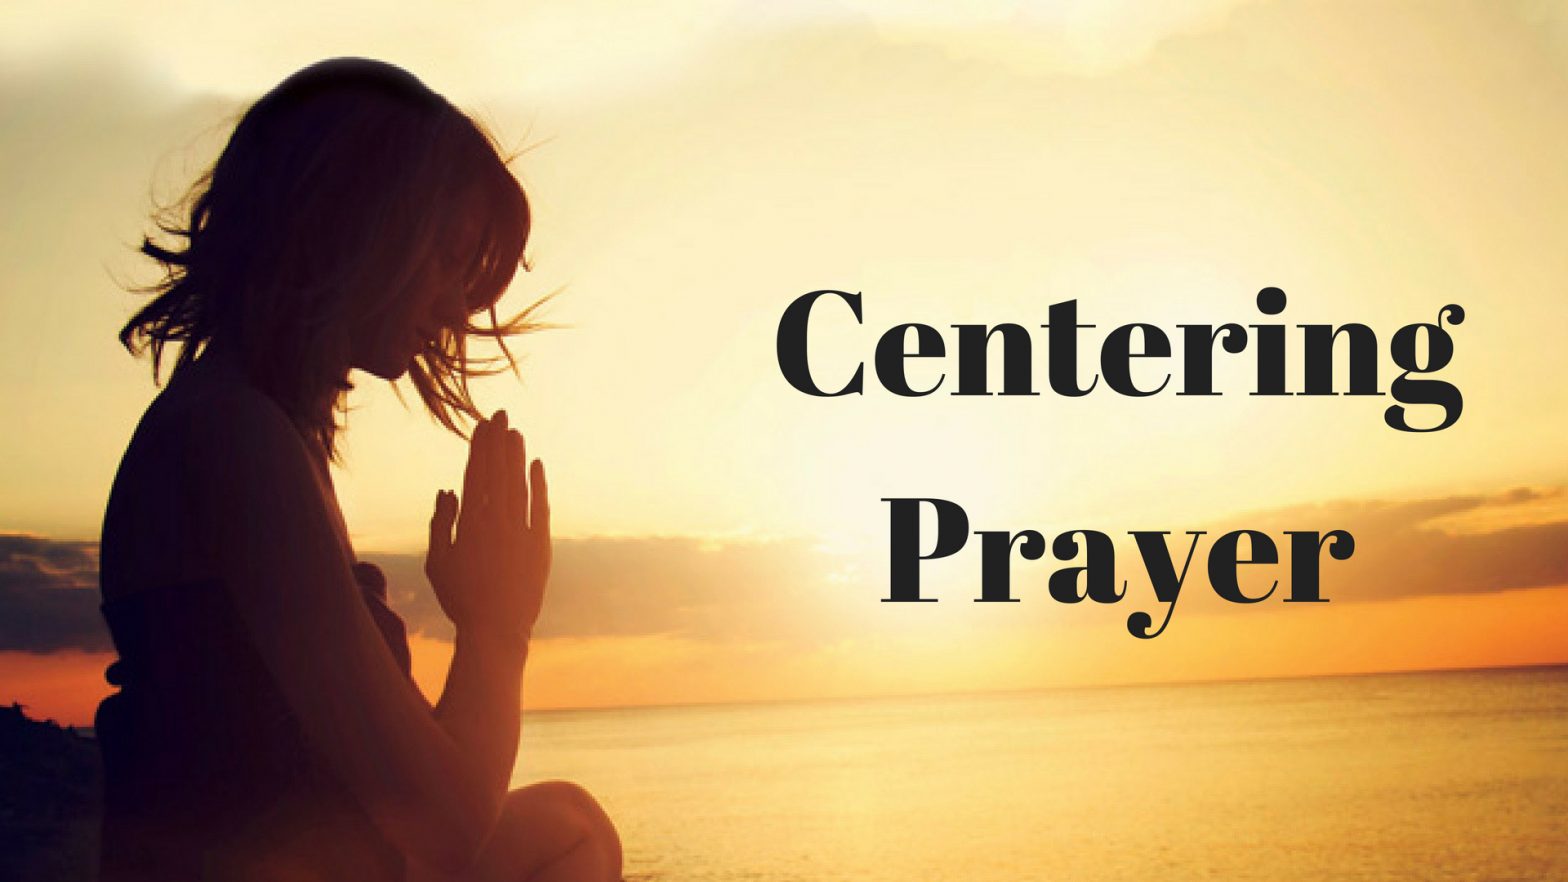 Is "Centering Prayer" Catholic?